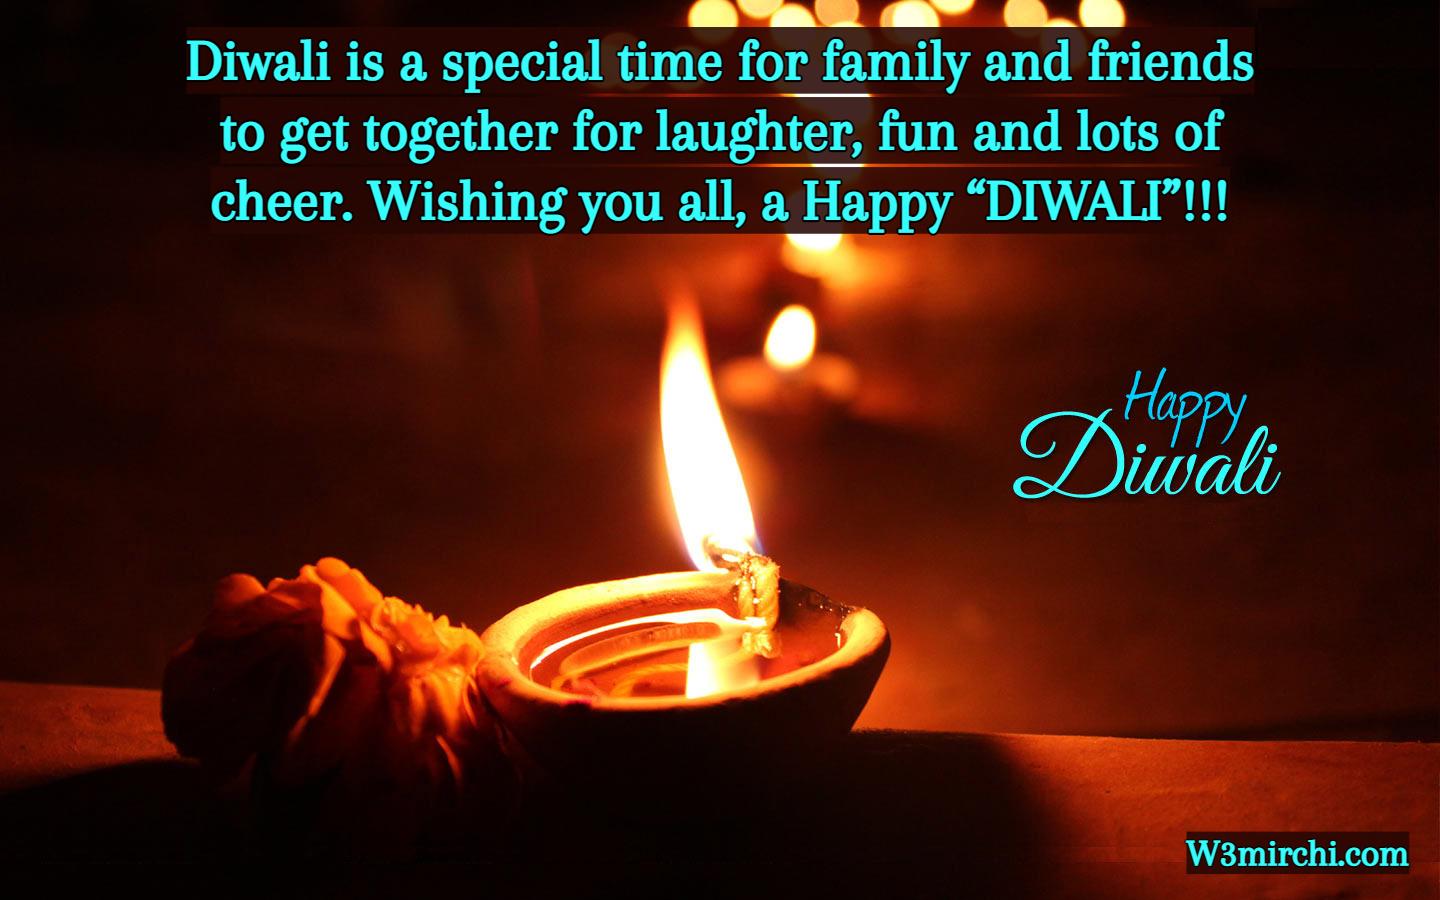 Wishing you all, a Happy “DIWALI”!!!